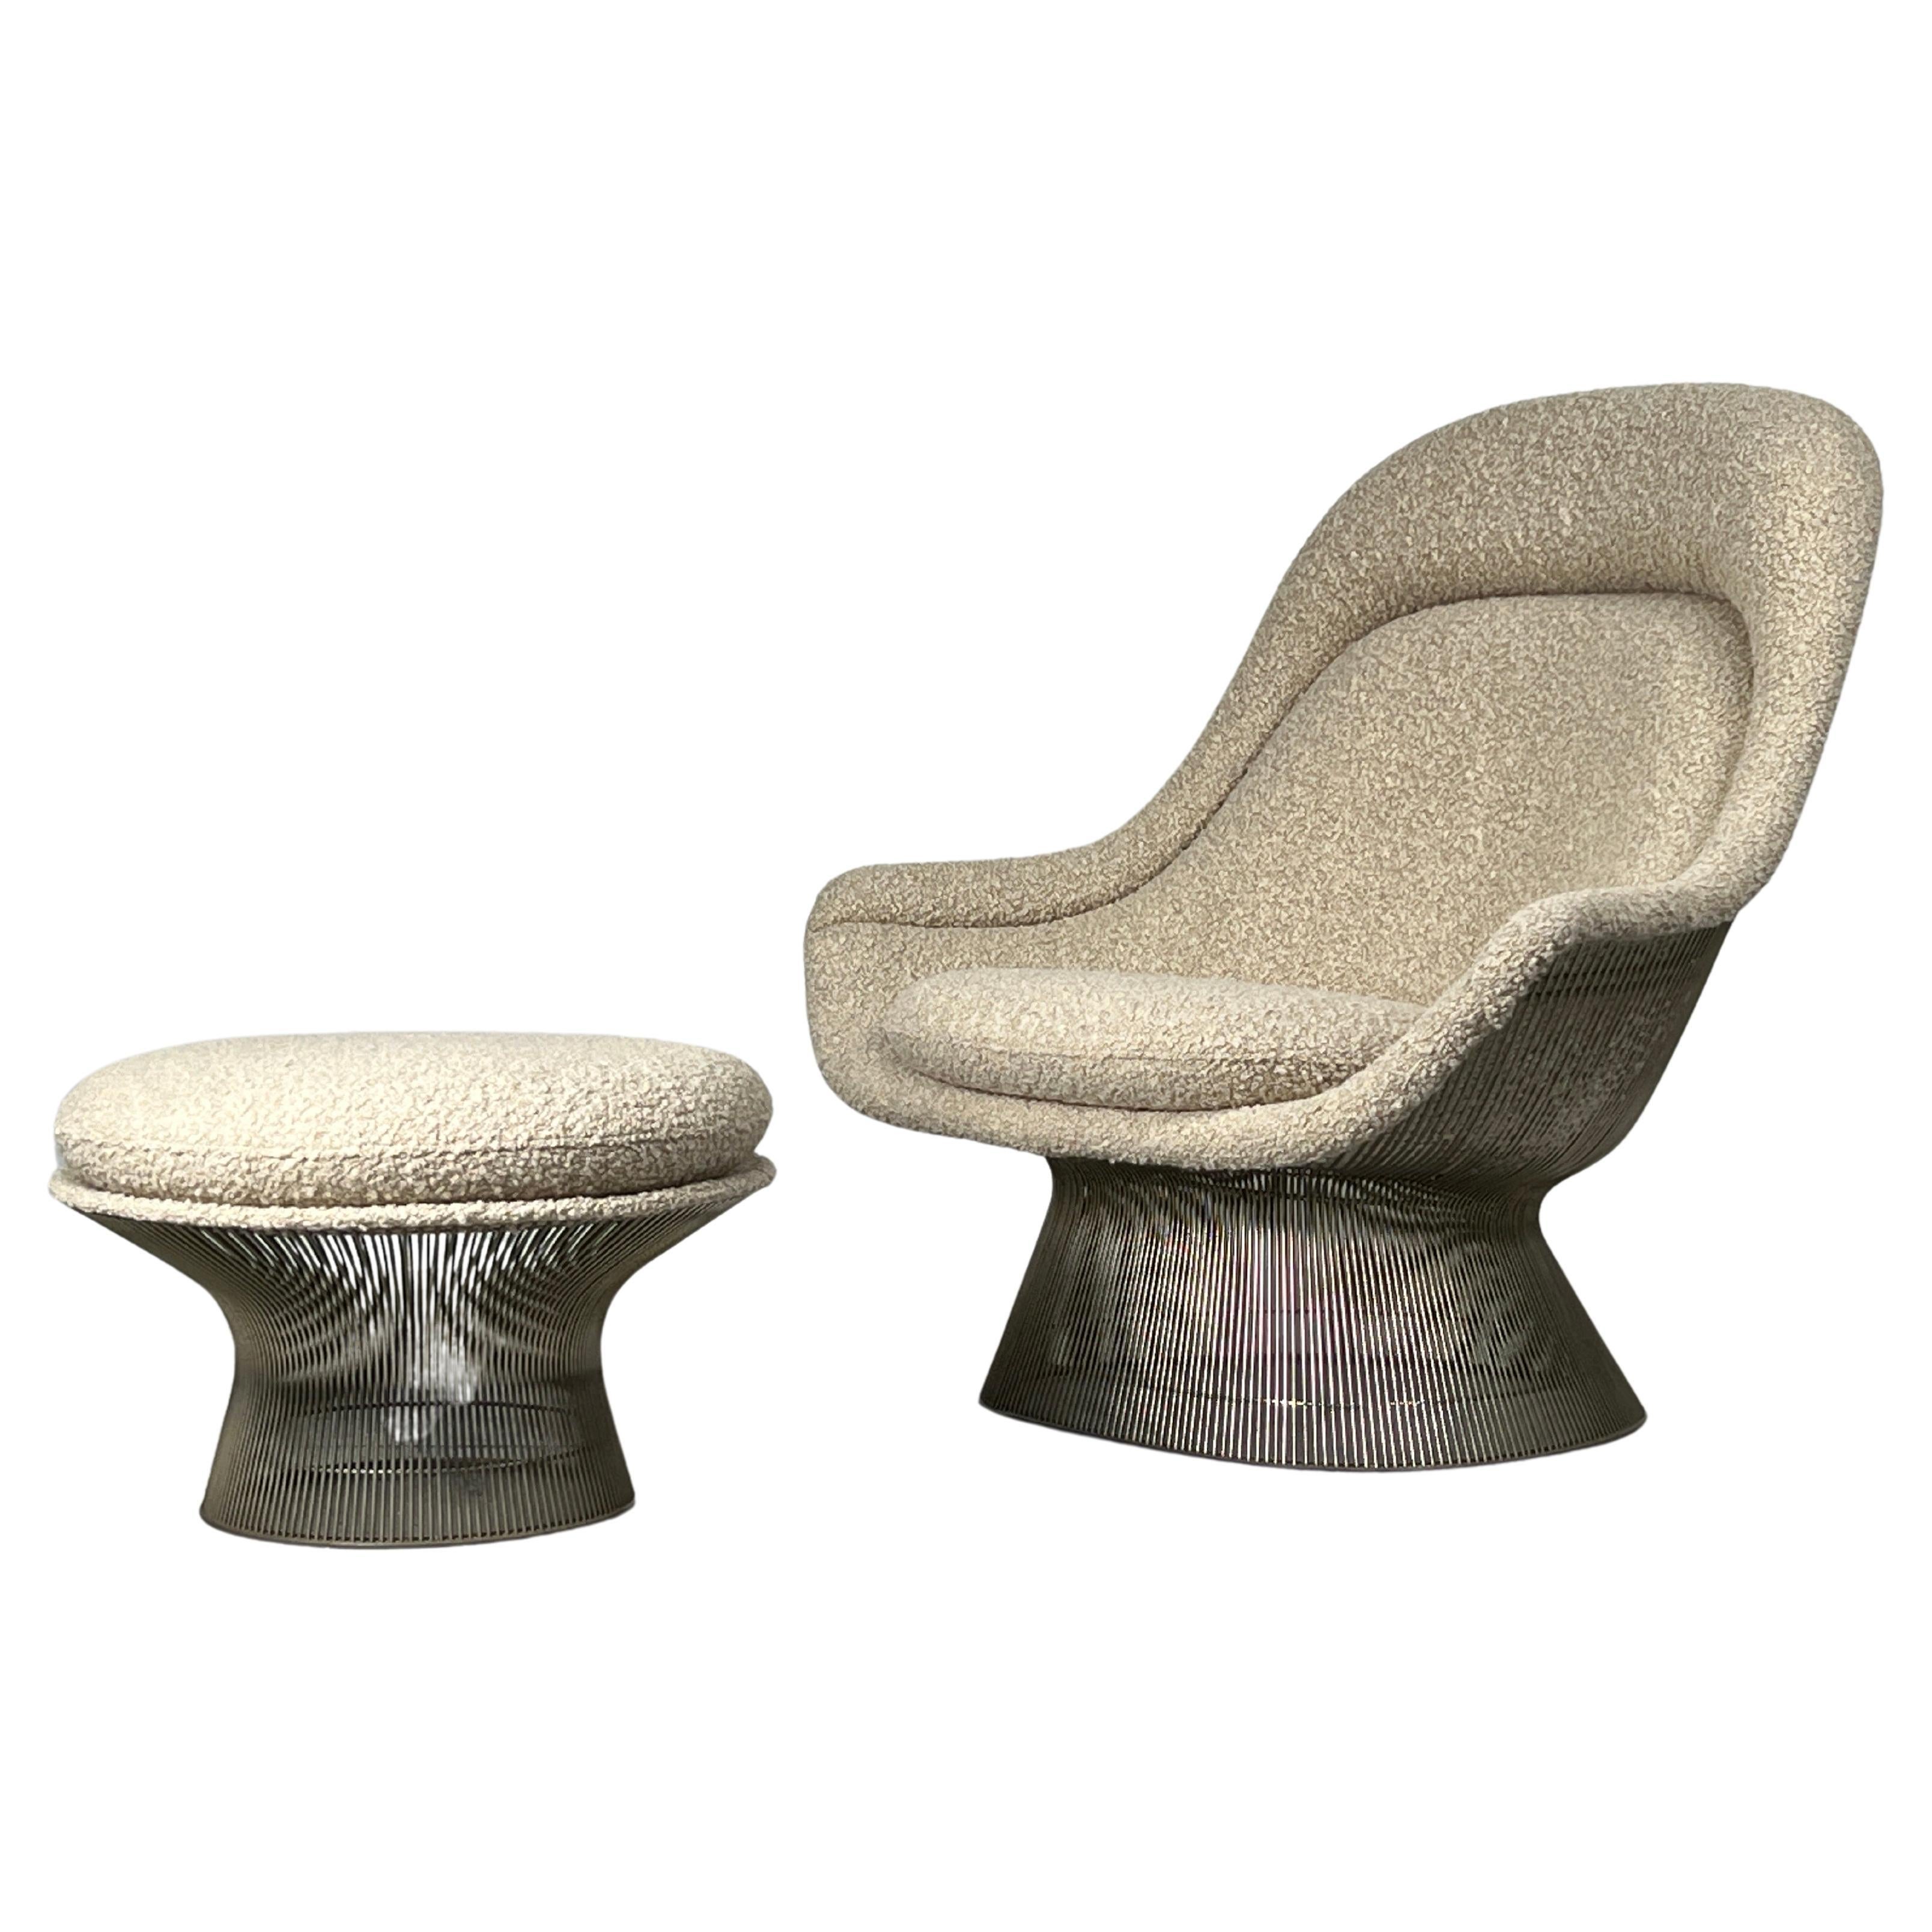 Warren Platner Throne Lounge chair and Ottoman 